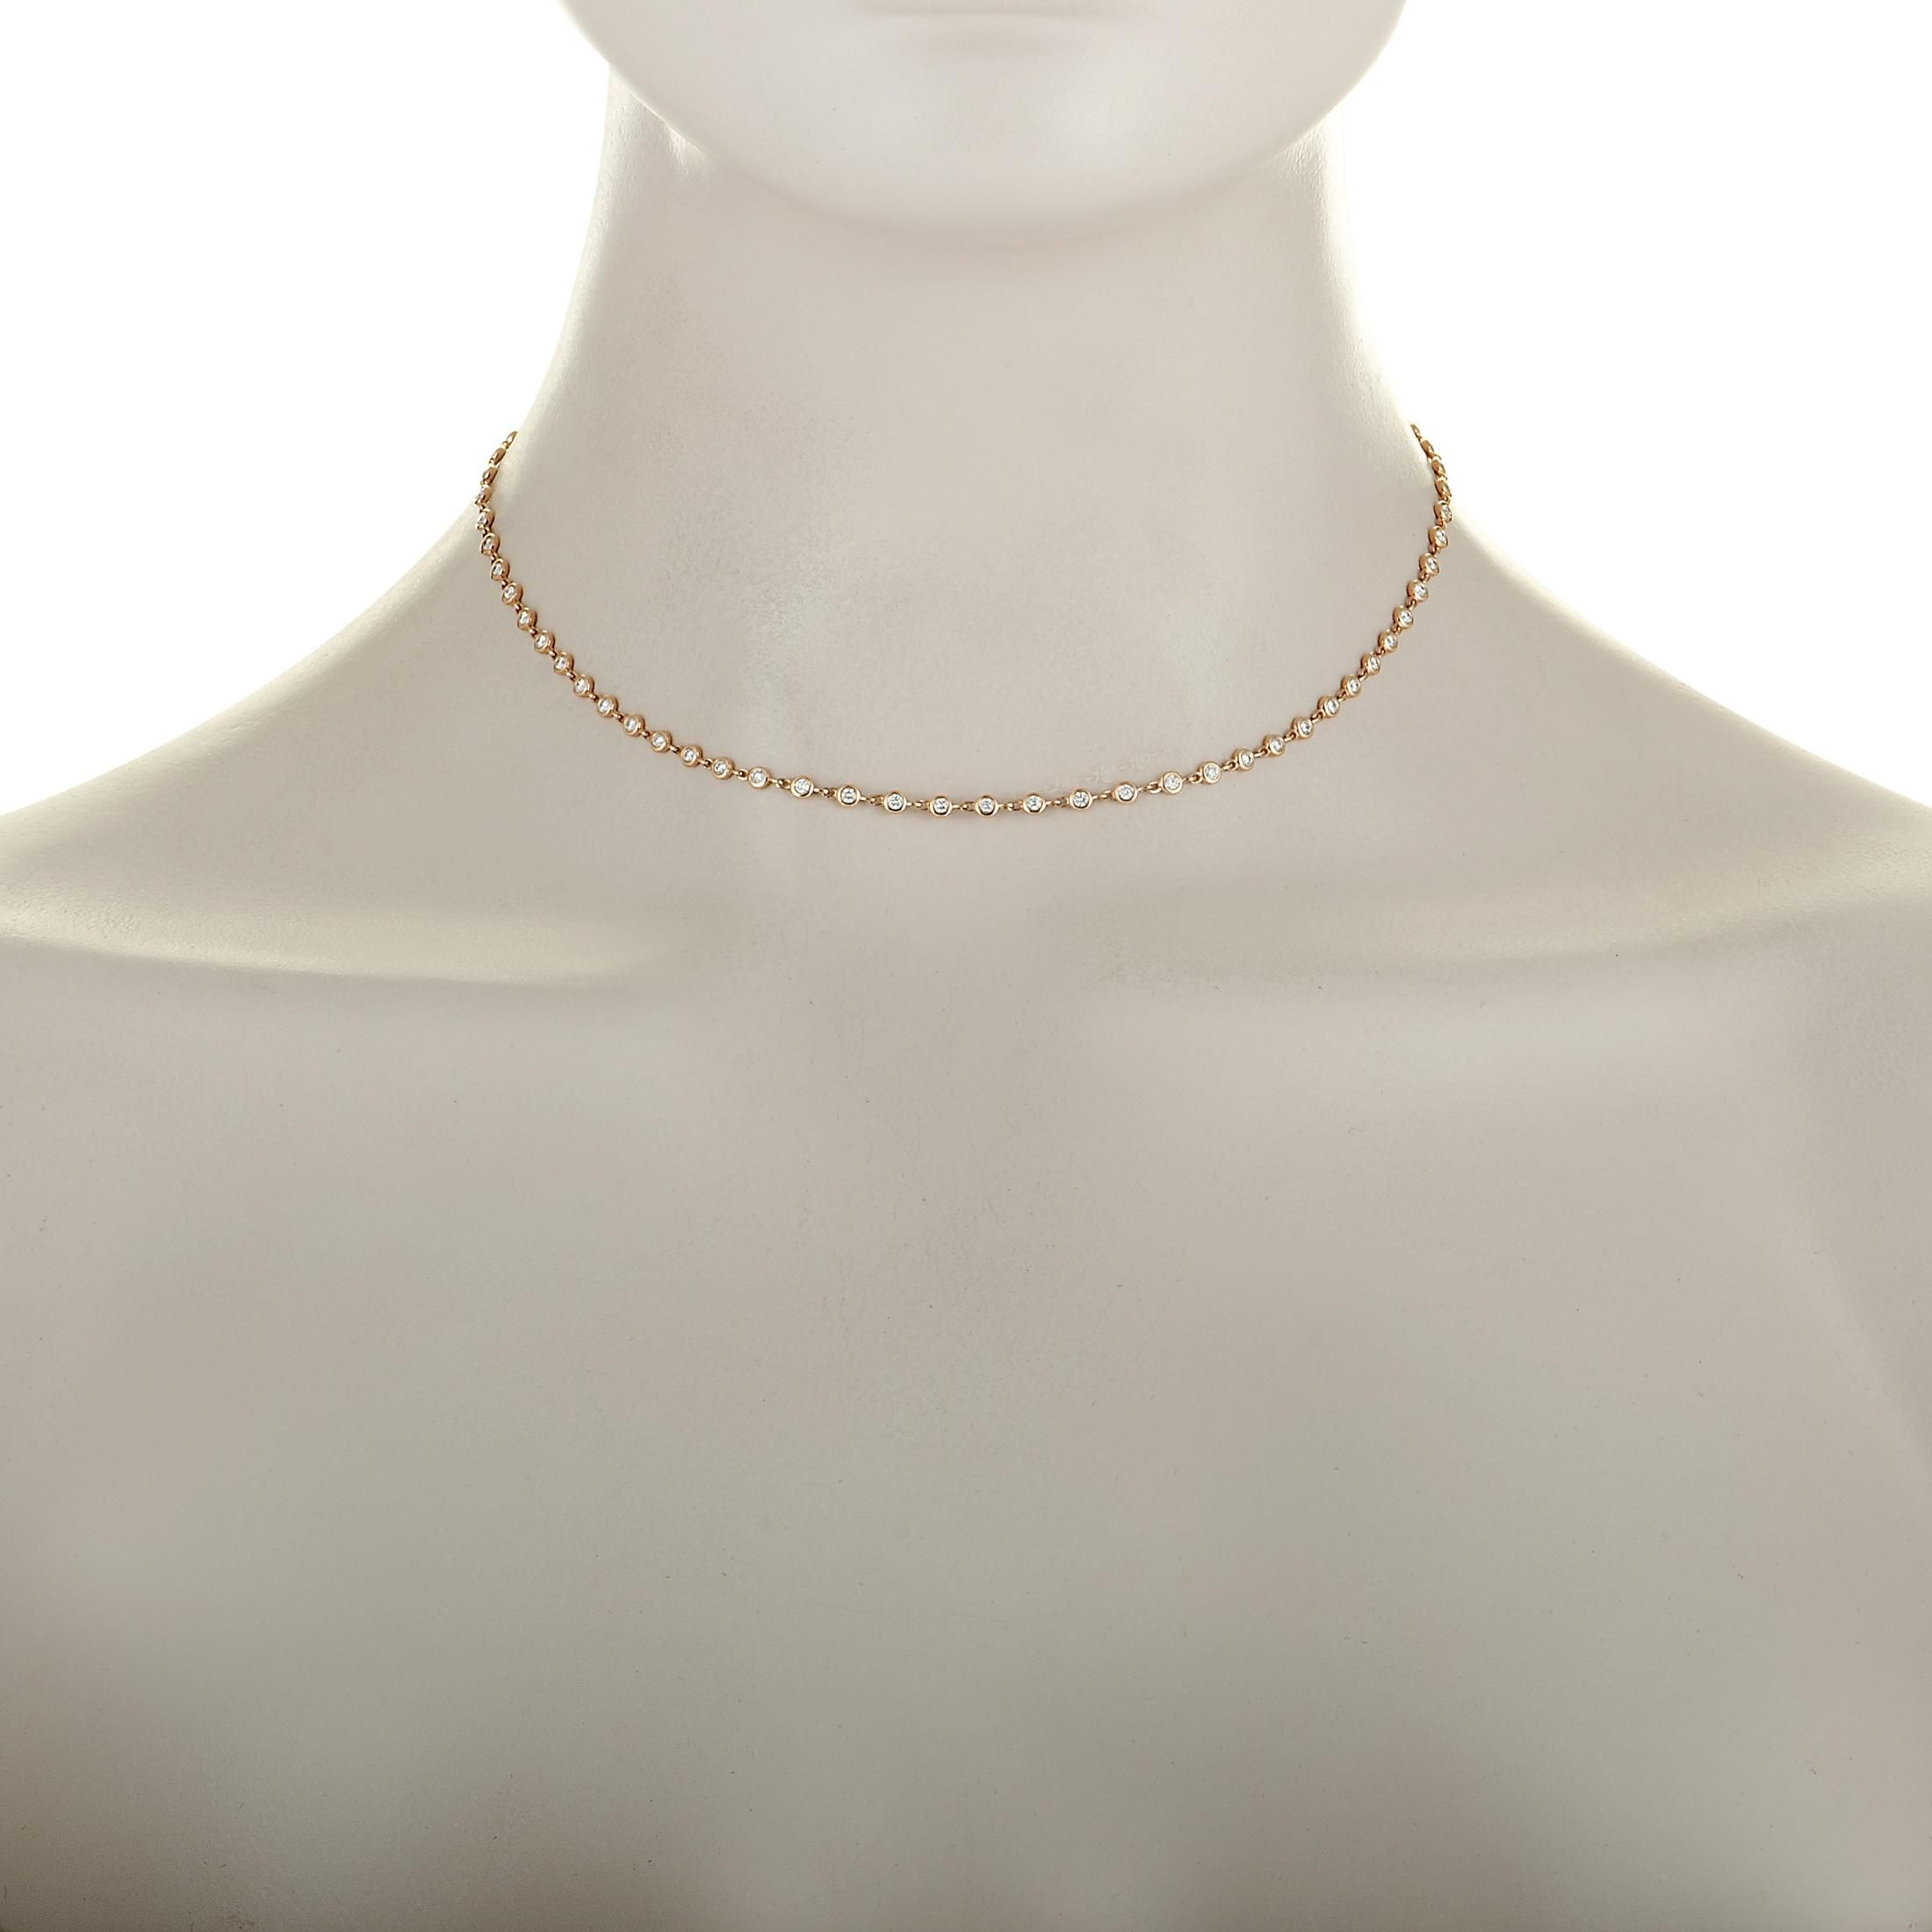 Lb Exclusive 18 Karat Rose Gold And Round Diamonds Sautoir Necklace With Regard To 2020 Rose Gold Diamond Sautoir Necklaces (View 23 of 25)